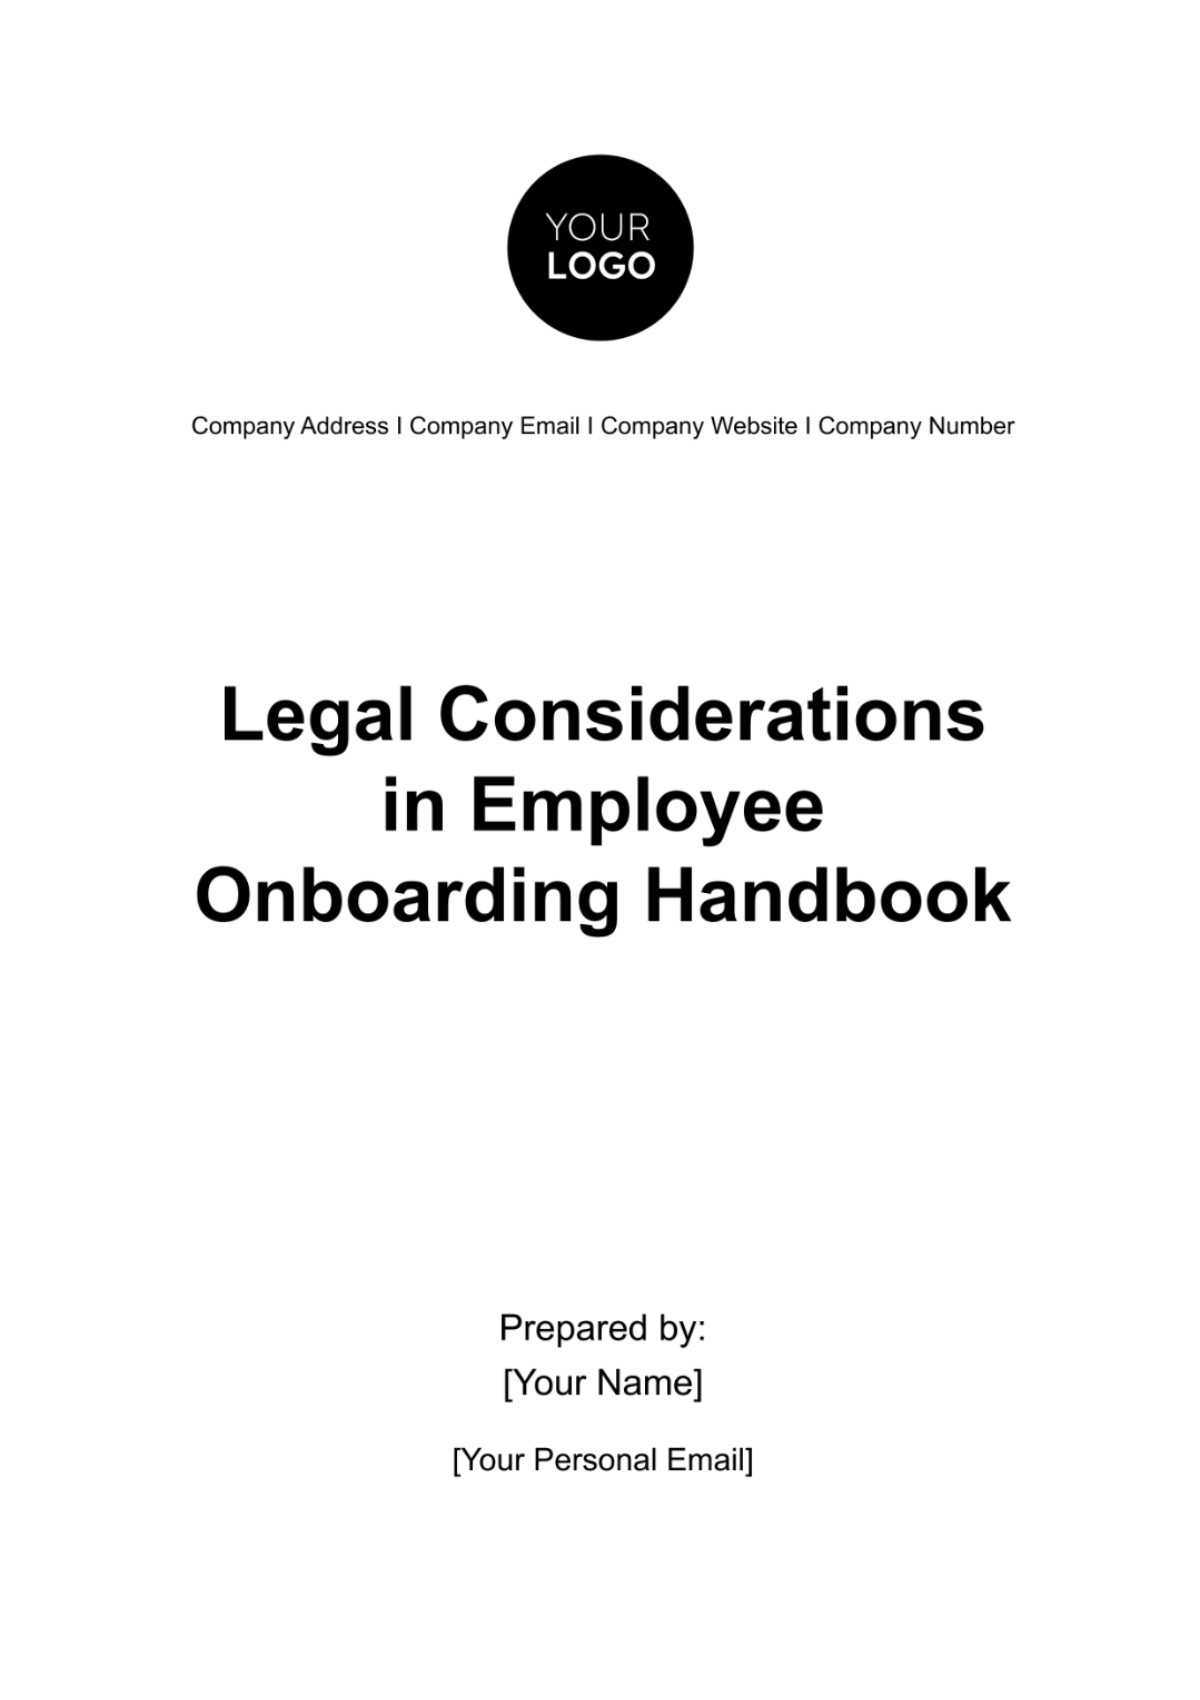 Legal Considerations in Employee Onboarding Handbook HR Template